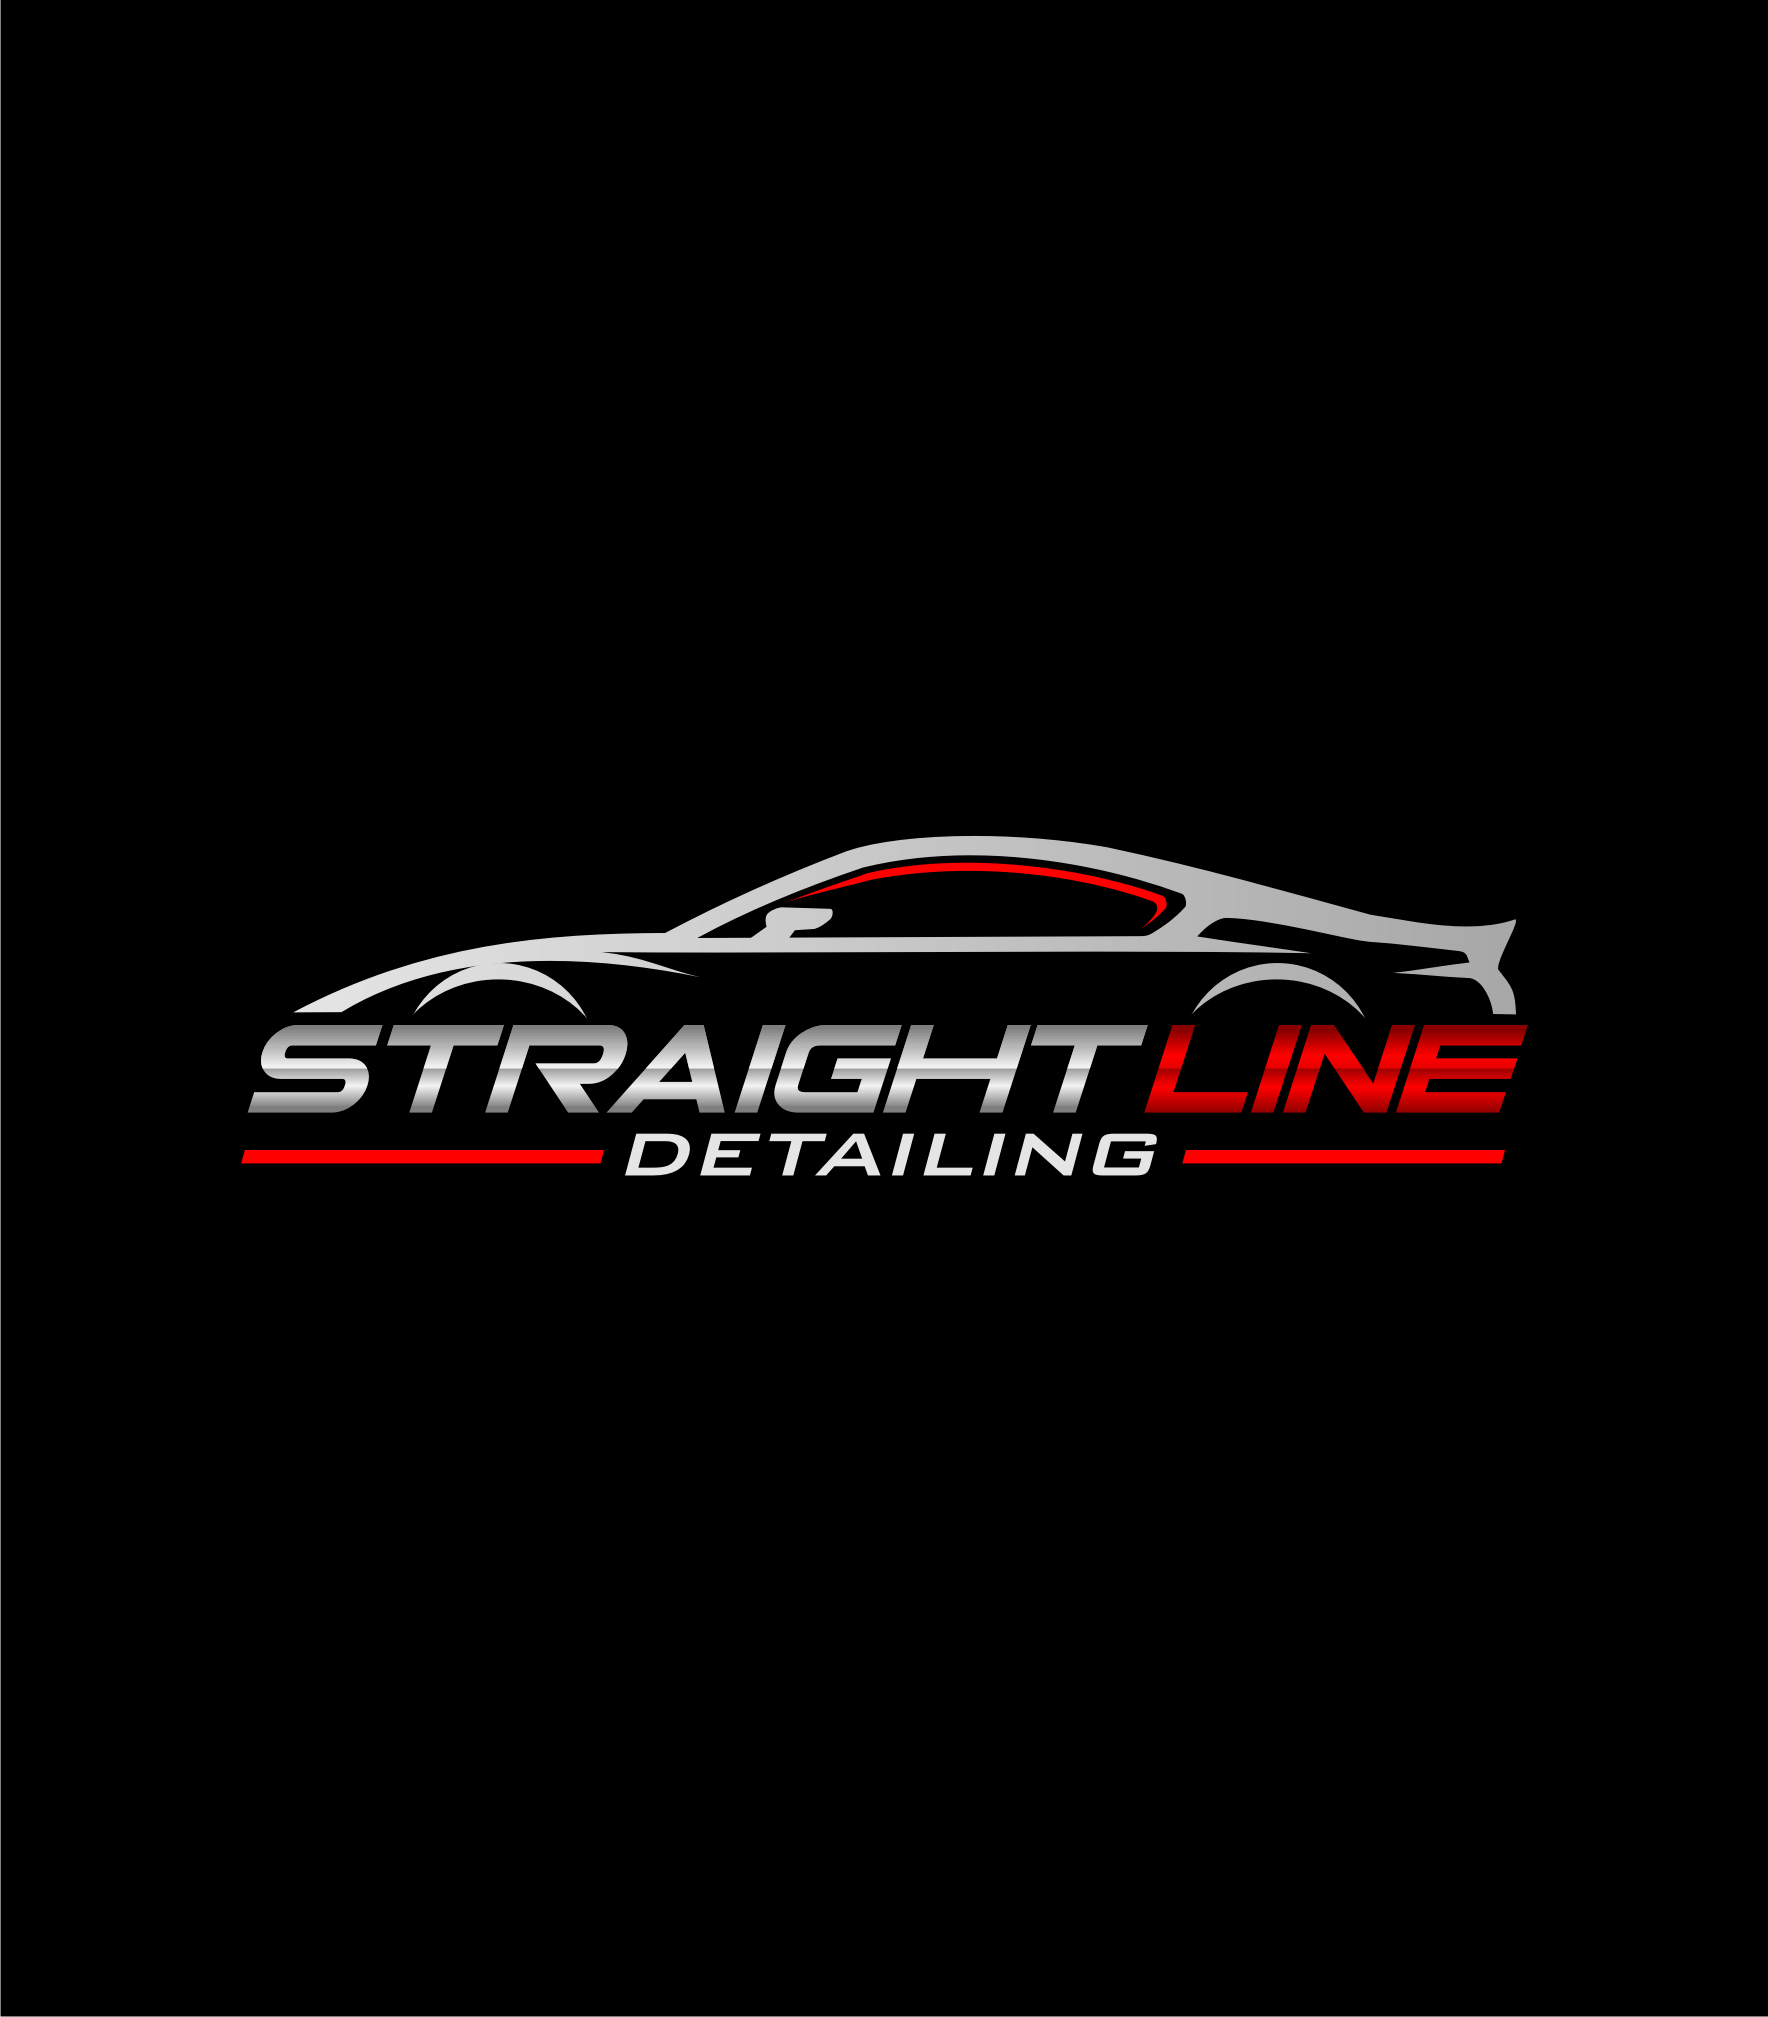 Generic Car Logo - Generic & overused logo designs sold - Straightline Automotive ...